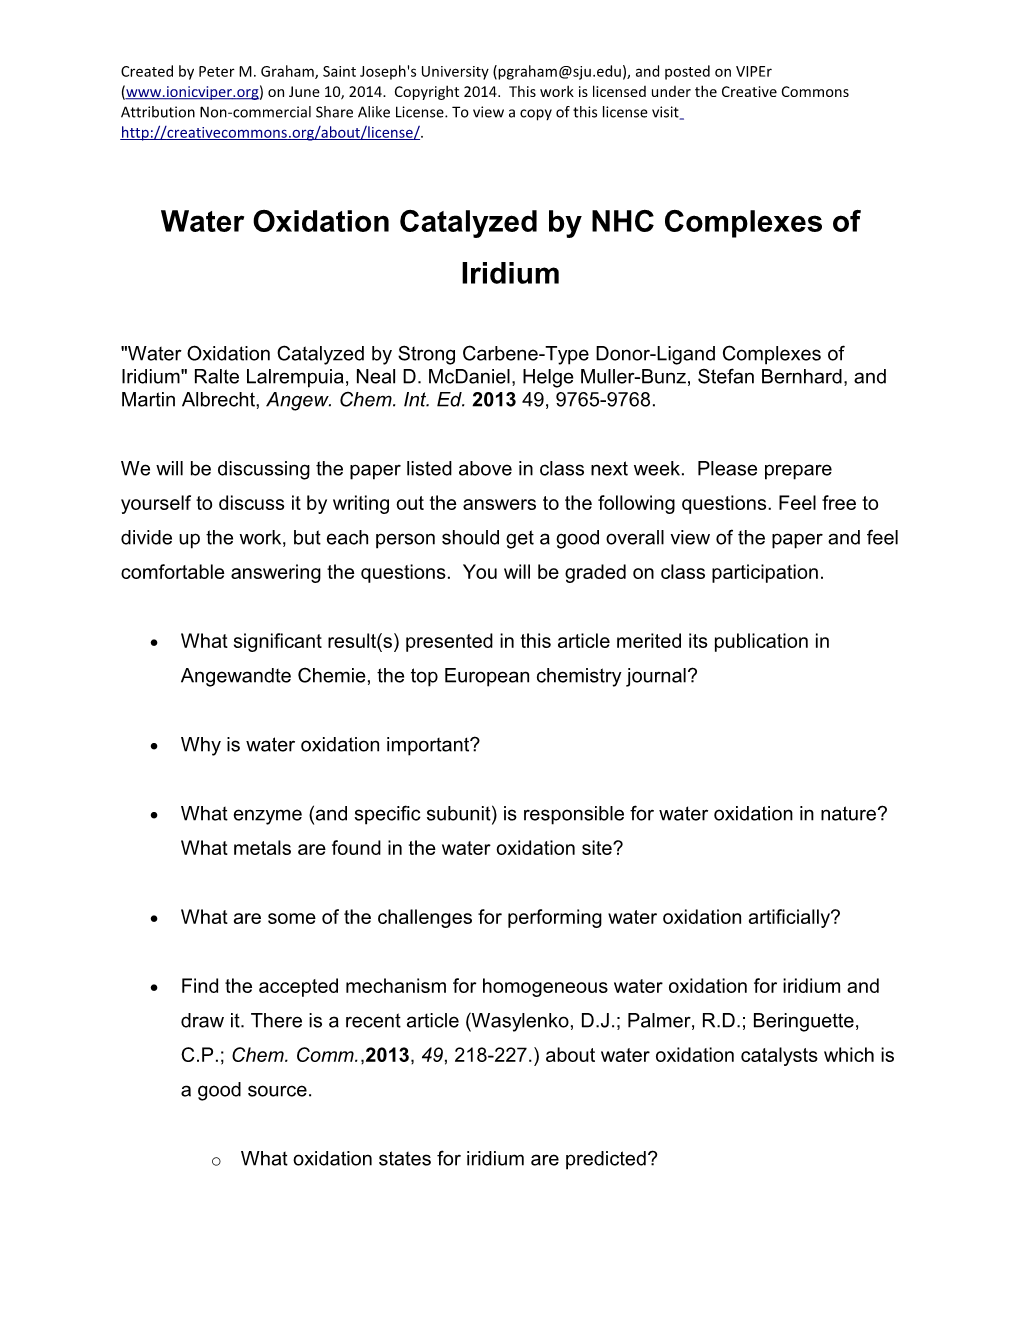 Water Oxidation Catalyzed by NHC Complexes of Iridium